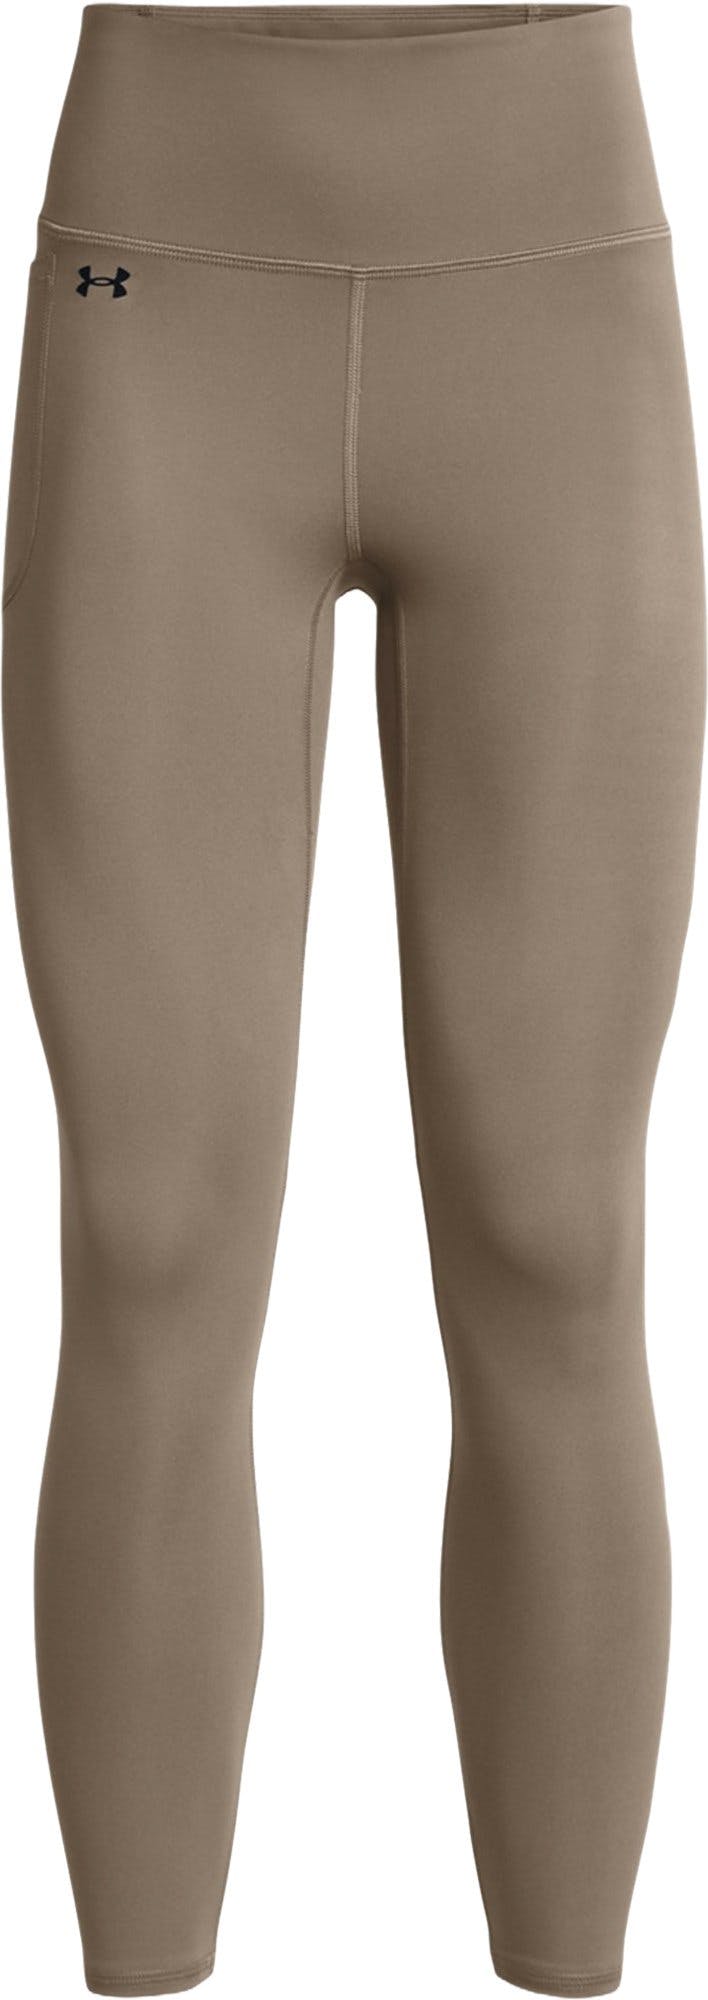 Product image for UA Motion Ankle Leggings - Women's